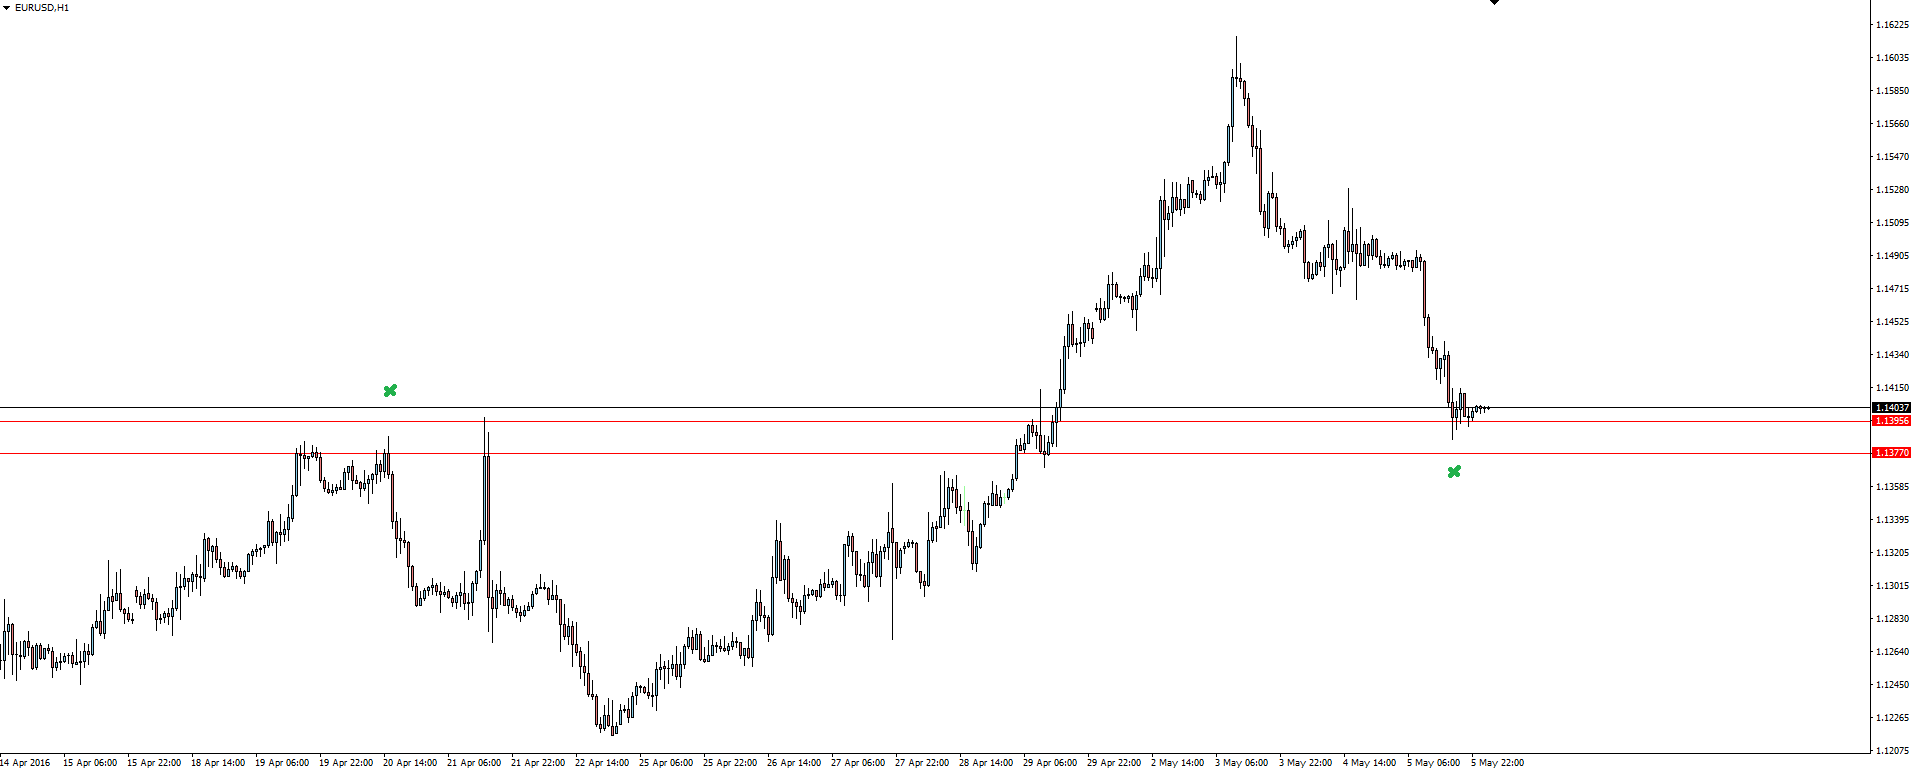 EUR/USD Hourly Chart